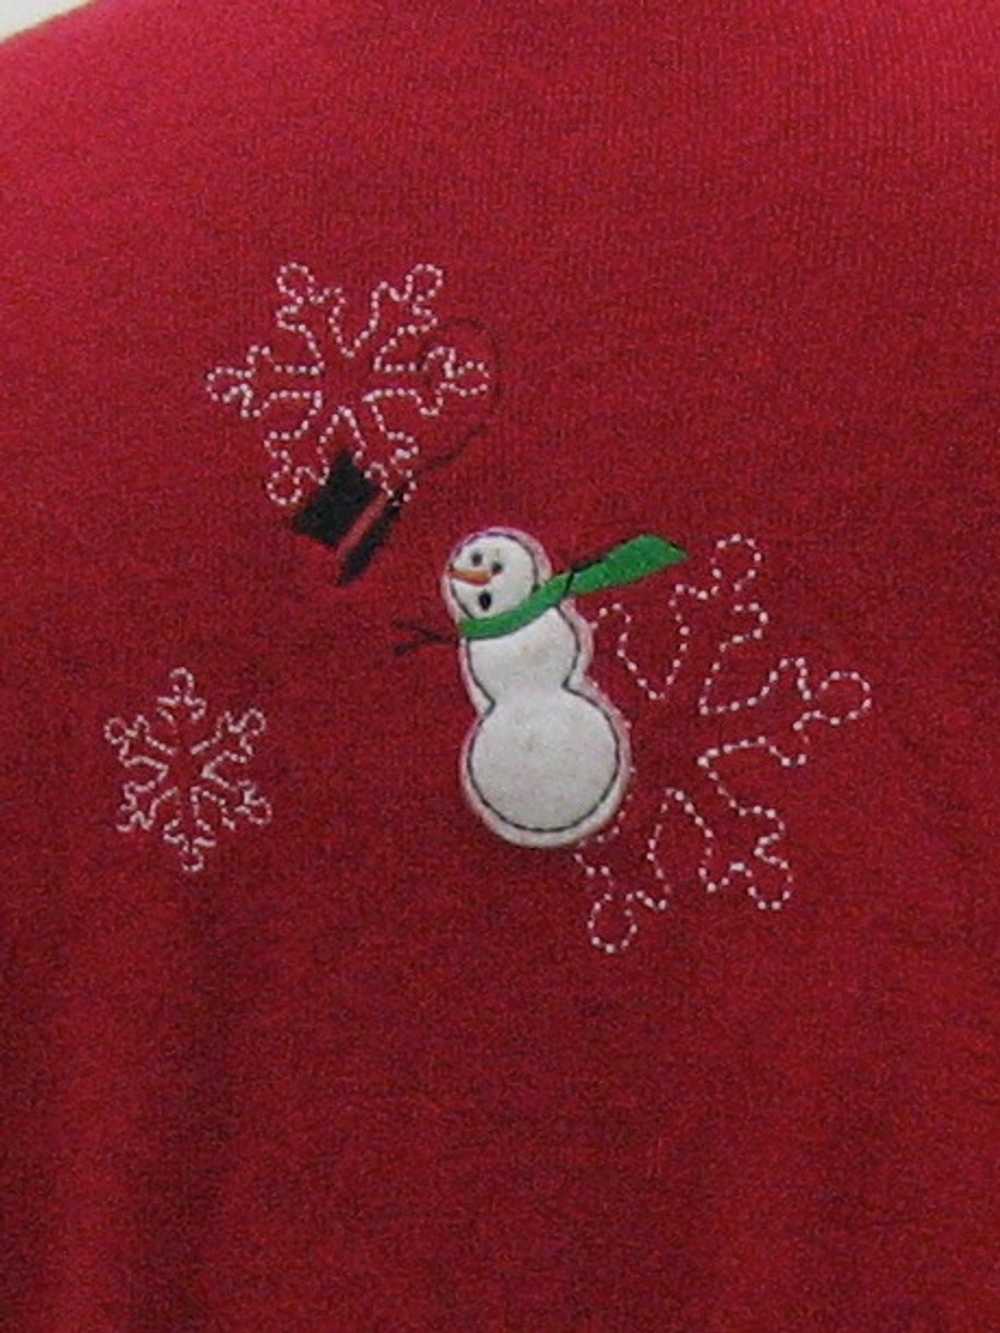 Croft and Barrow Unisex Ugly Christmas Sweater - image 3